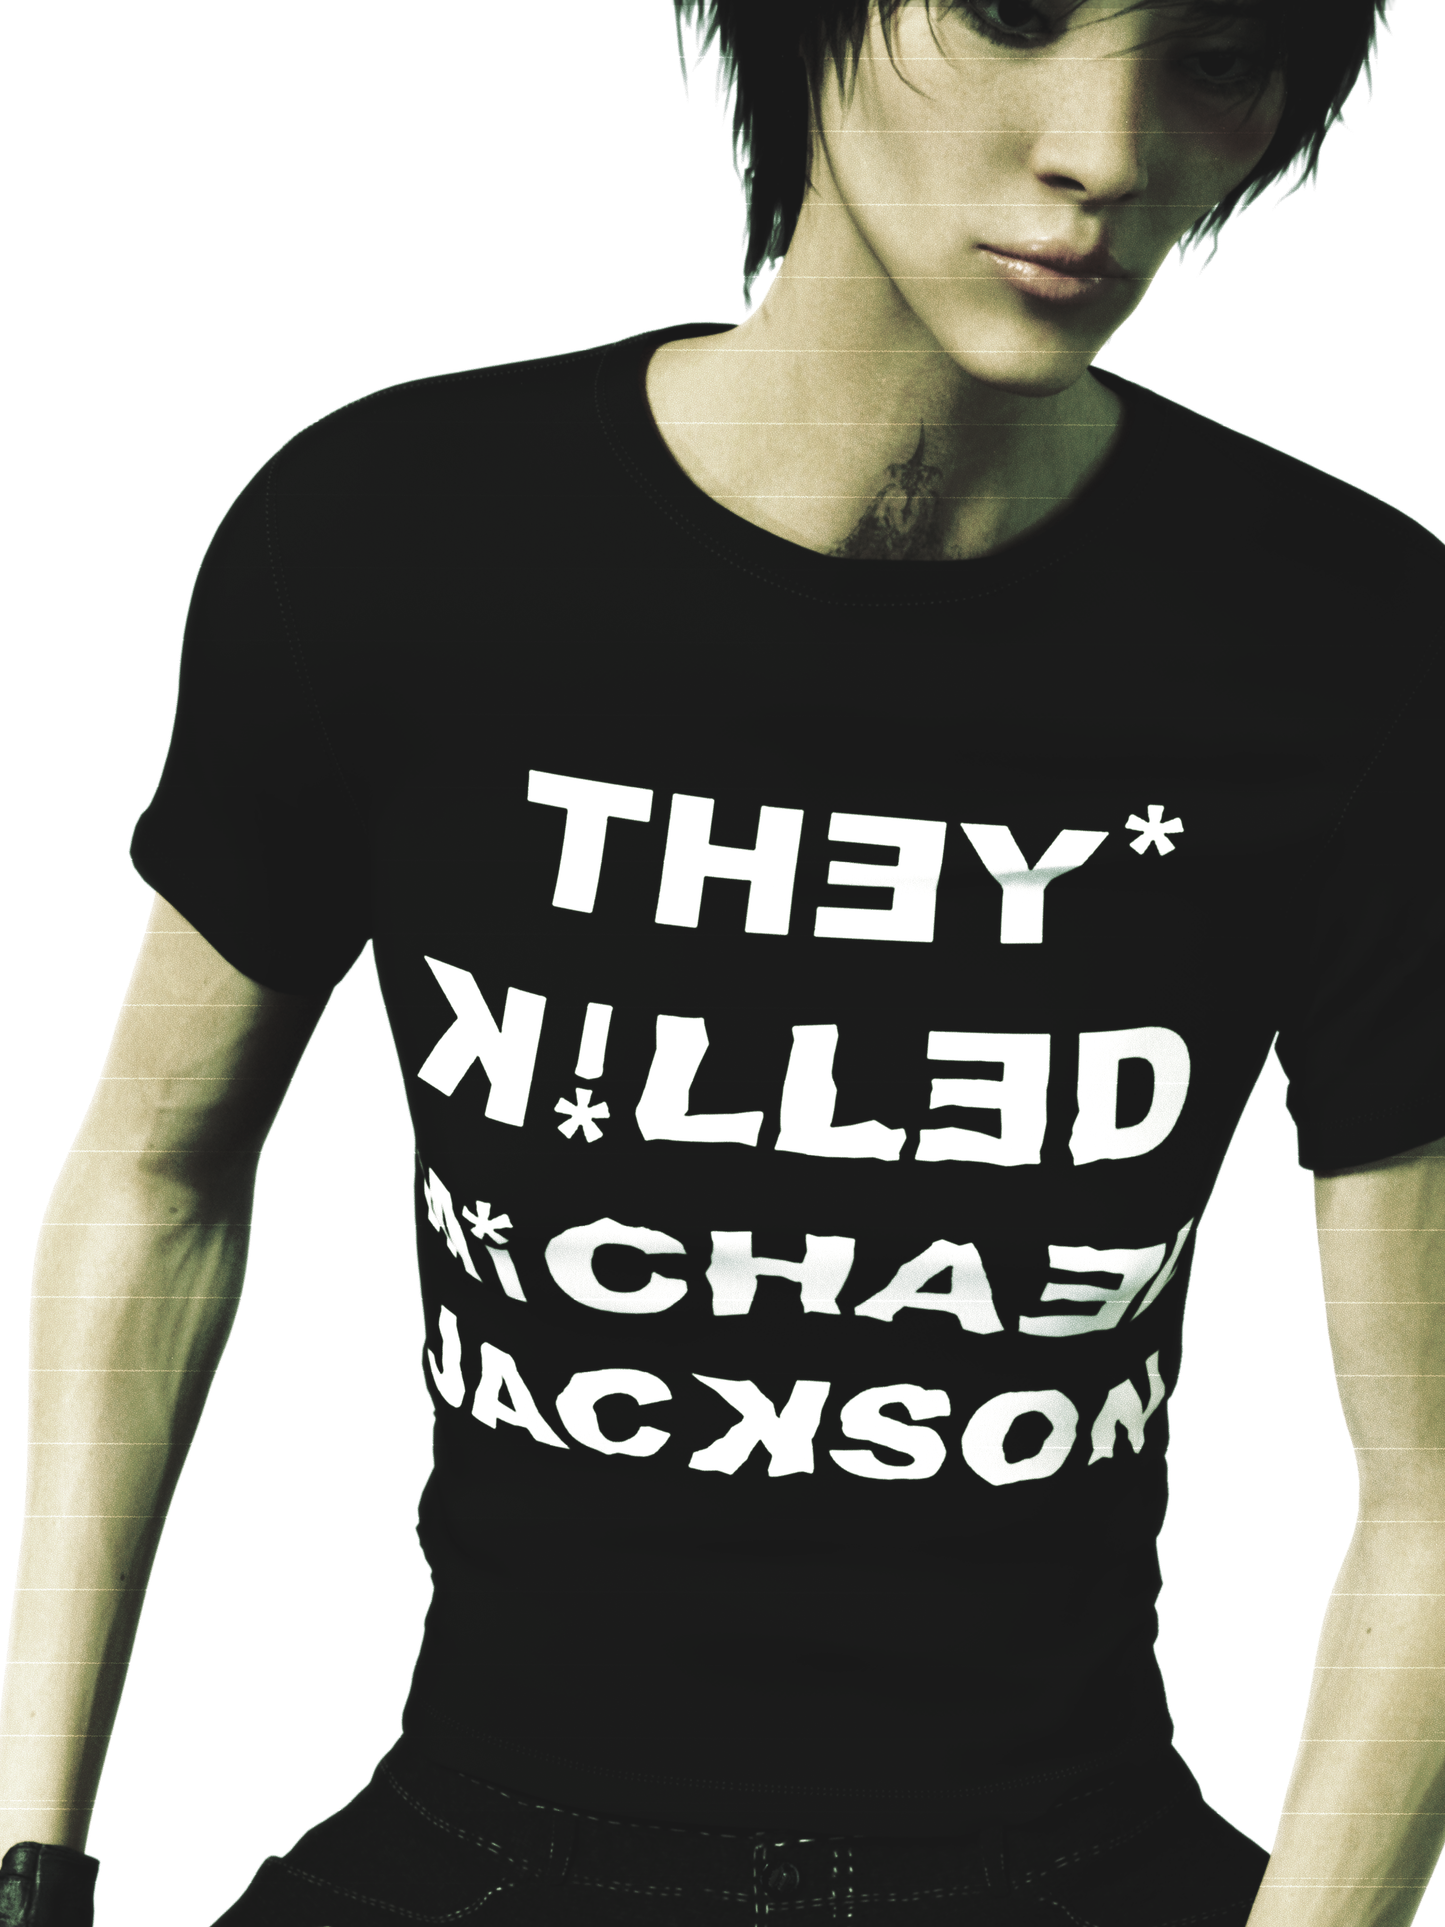 "THEY KILLED MICHAEL JACKSON" - BLACK